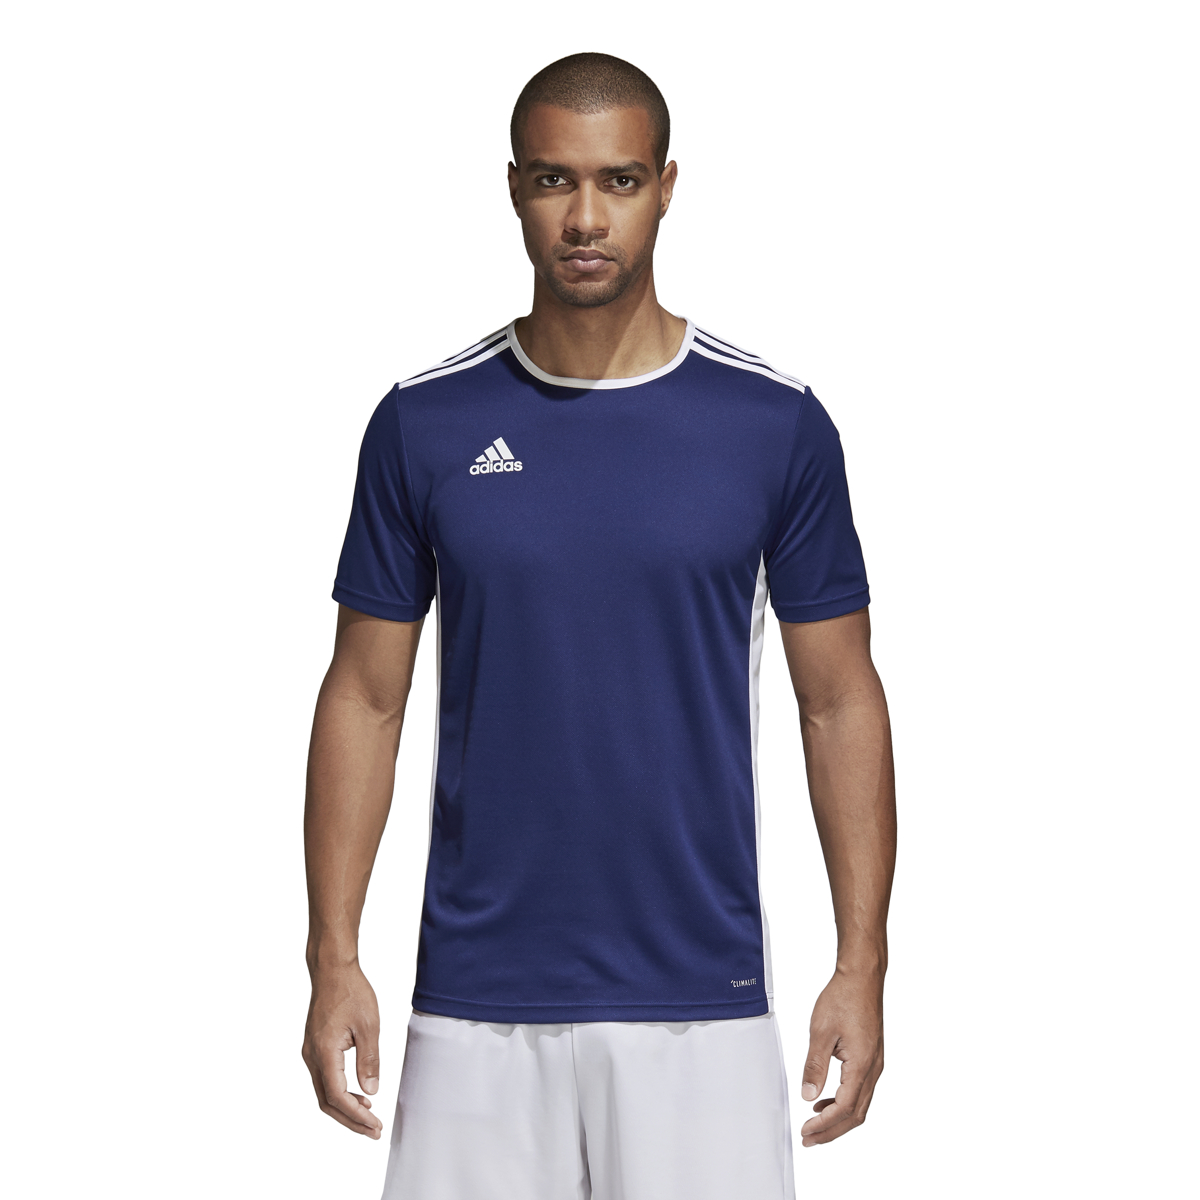 Adidas DARK BLUE/WHITE Men's Entrada ClimaLite Soccer Shirt, US Small - image 3 of 6